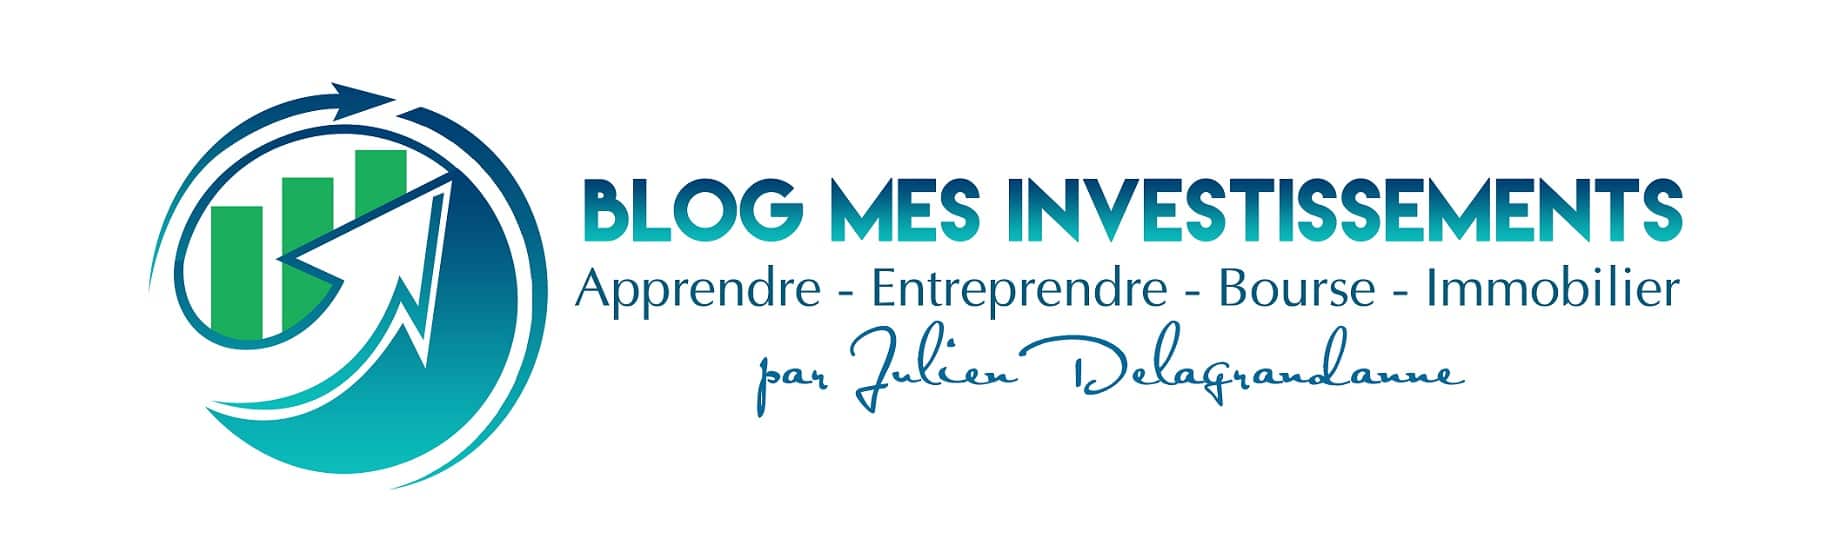 Blog Mes Investissements Logo